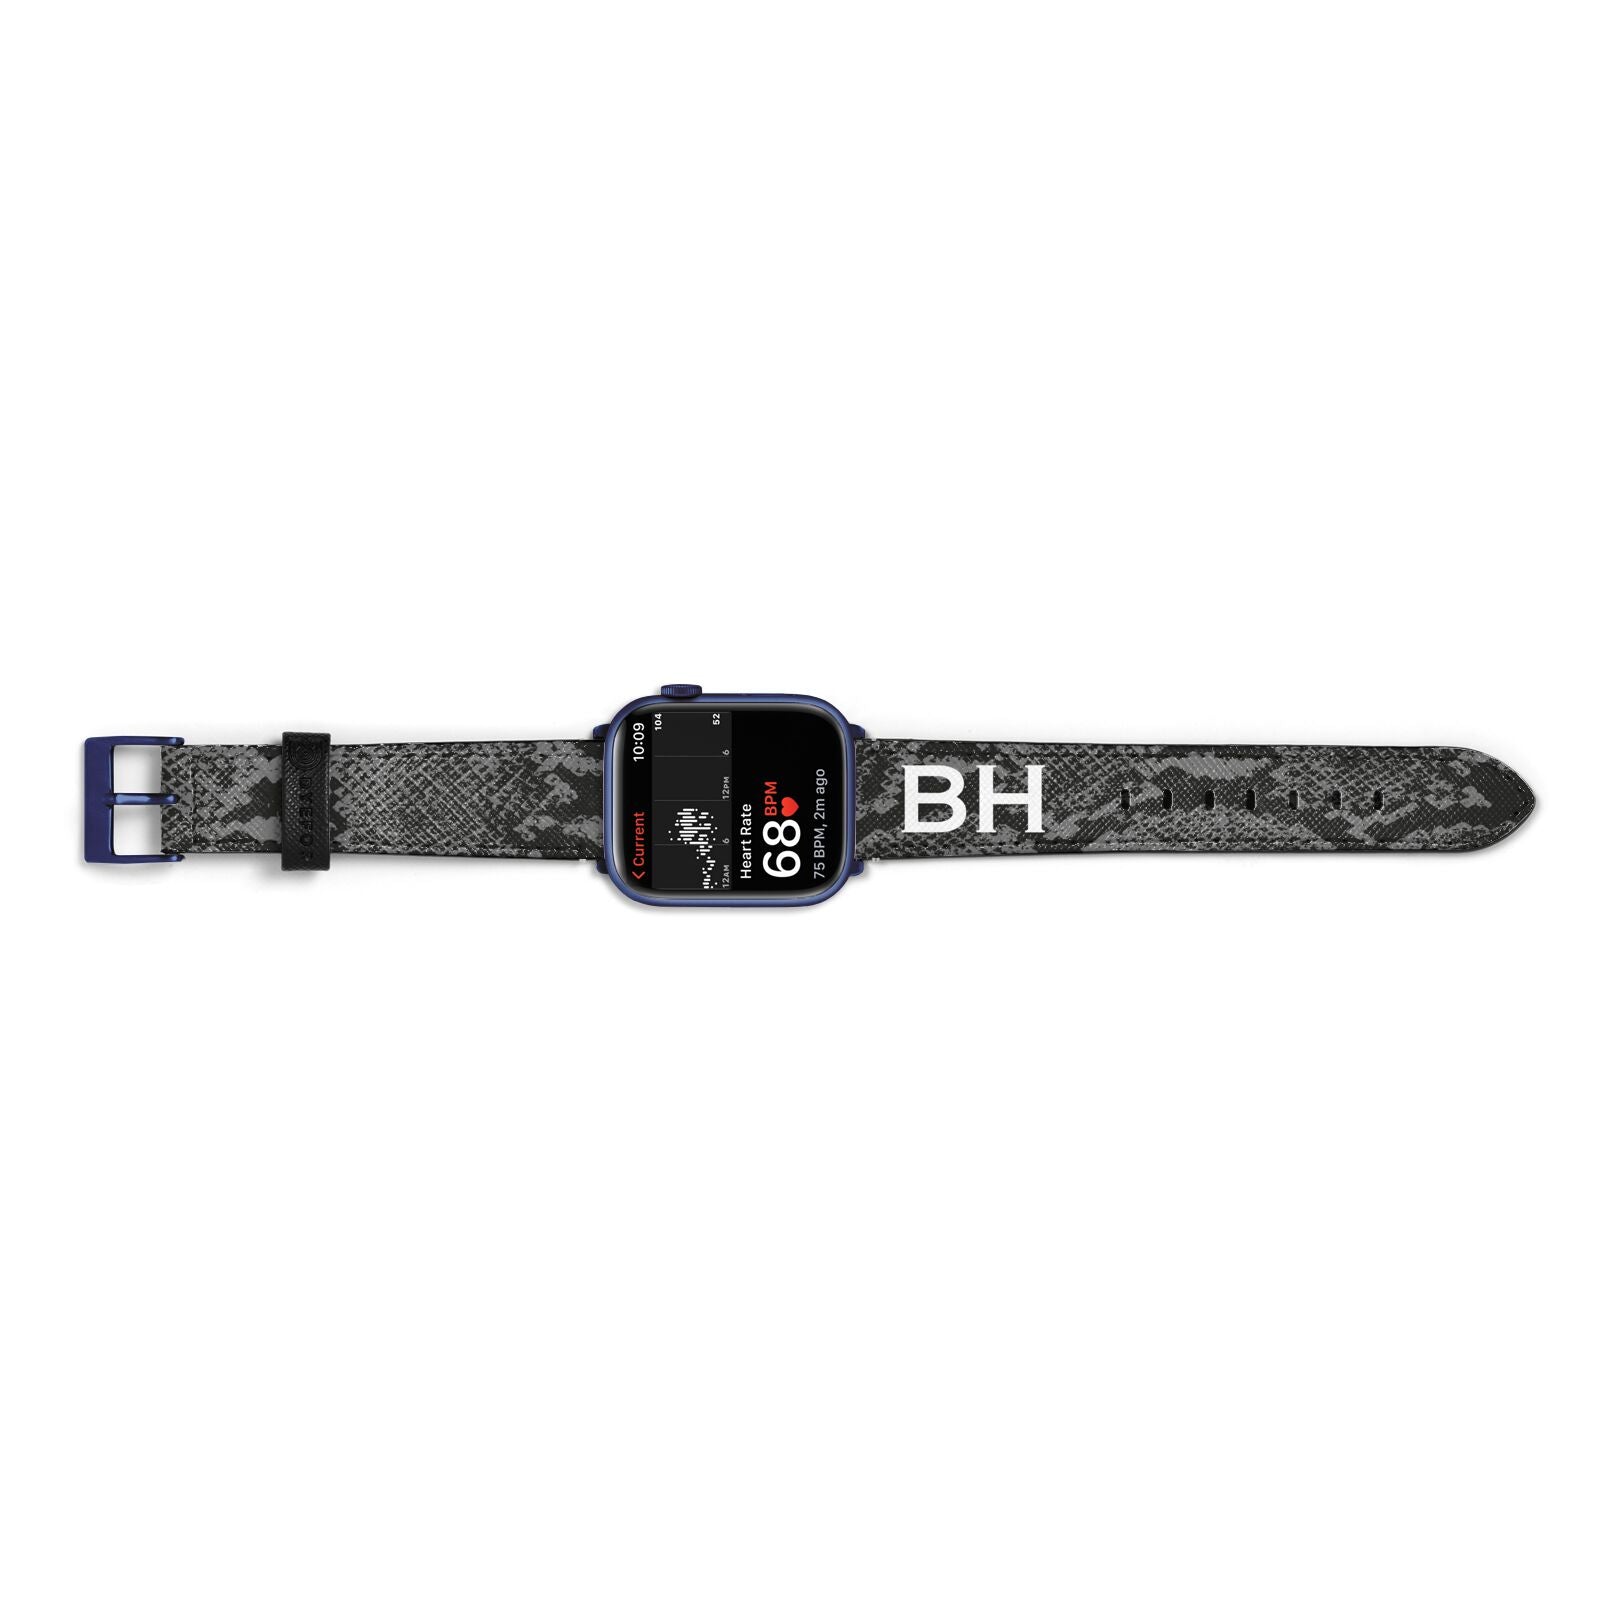 Personalised Snakeskin Apple Watch Strap Size 38mm Landscape Image Blue Hardware